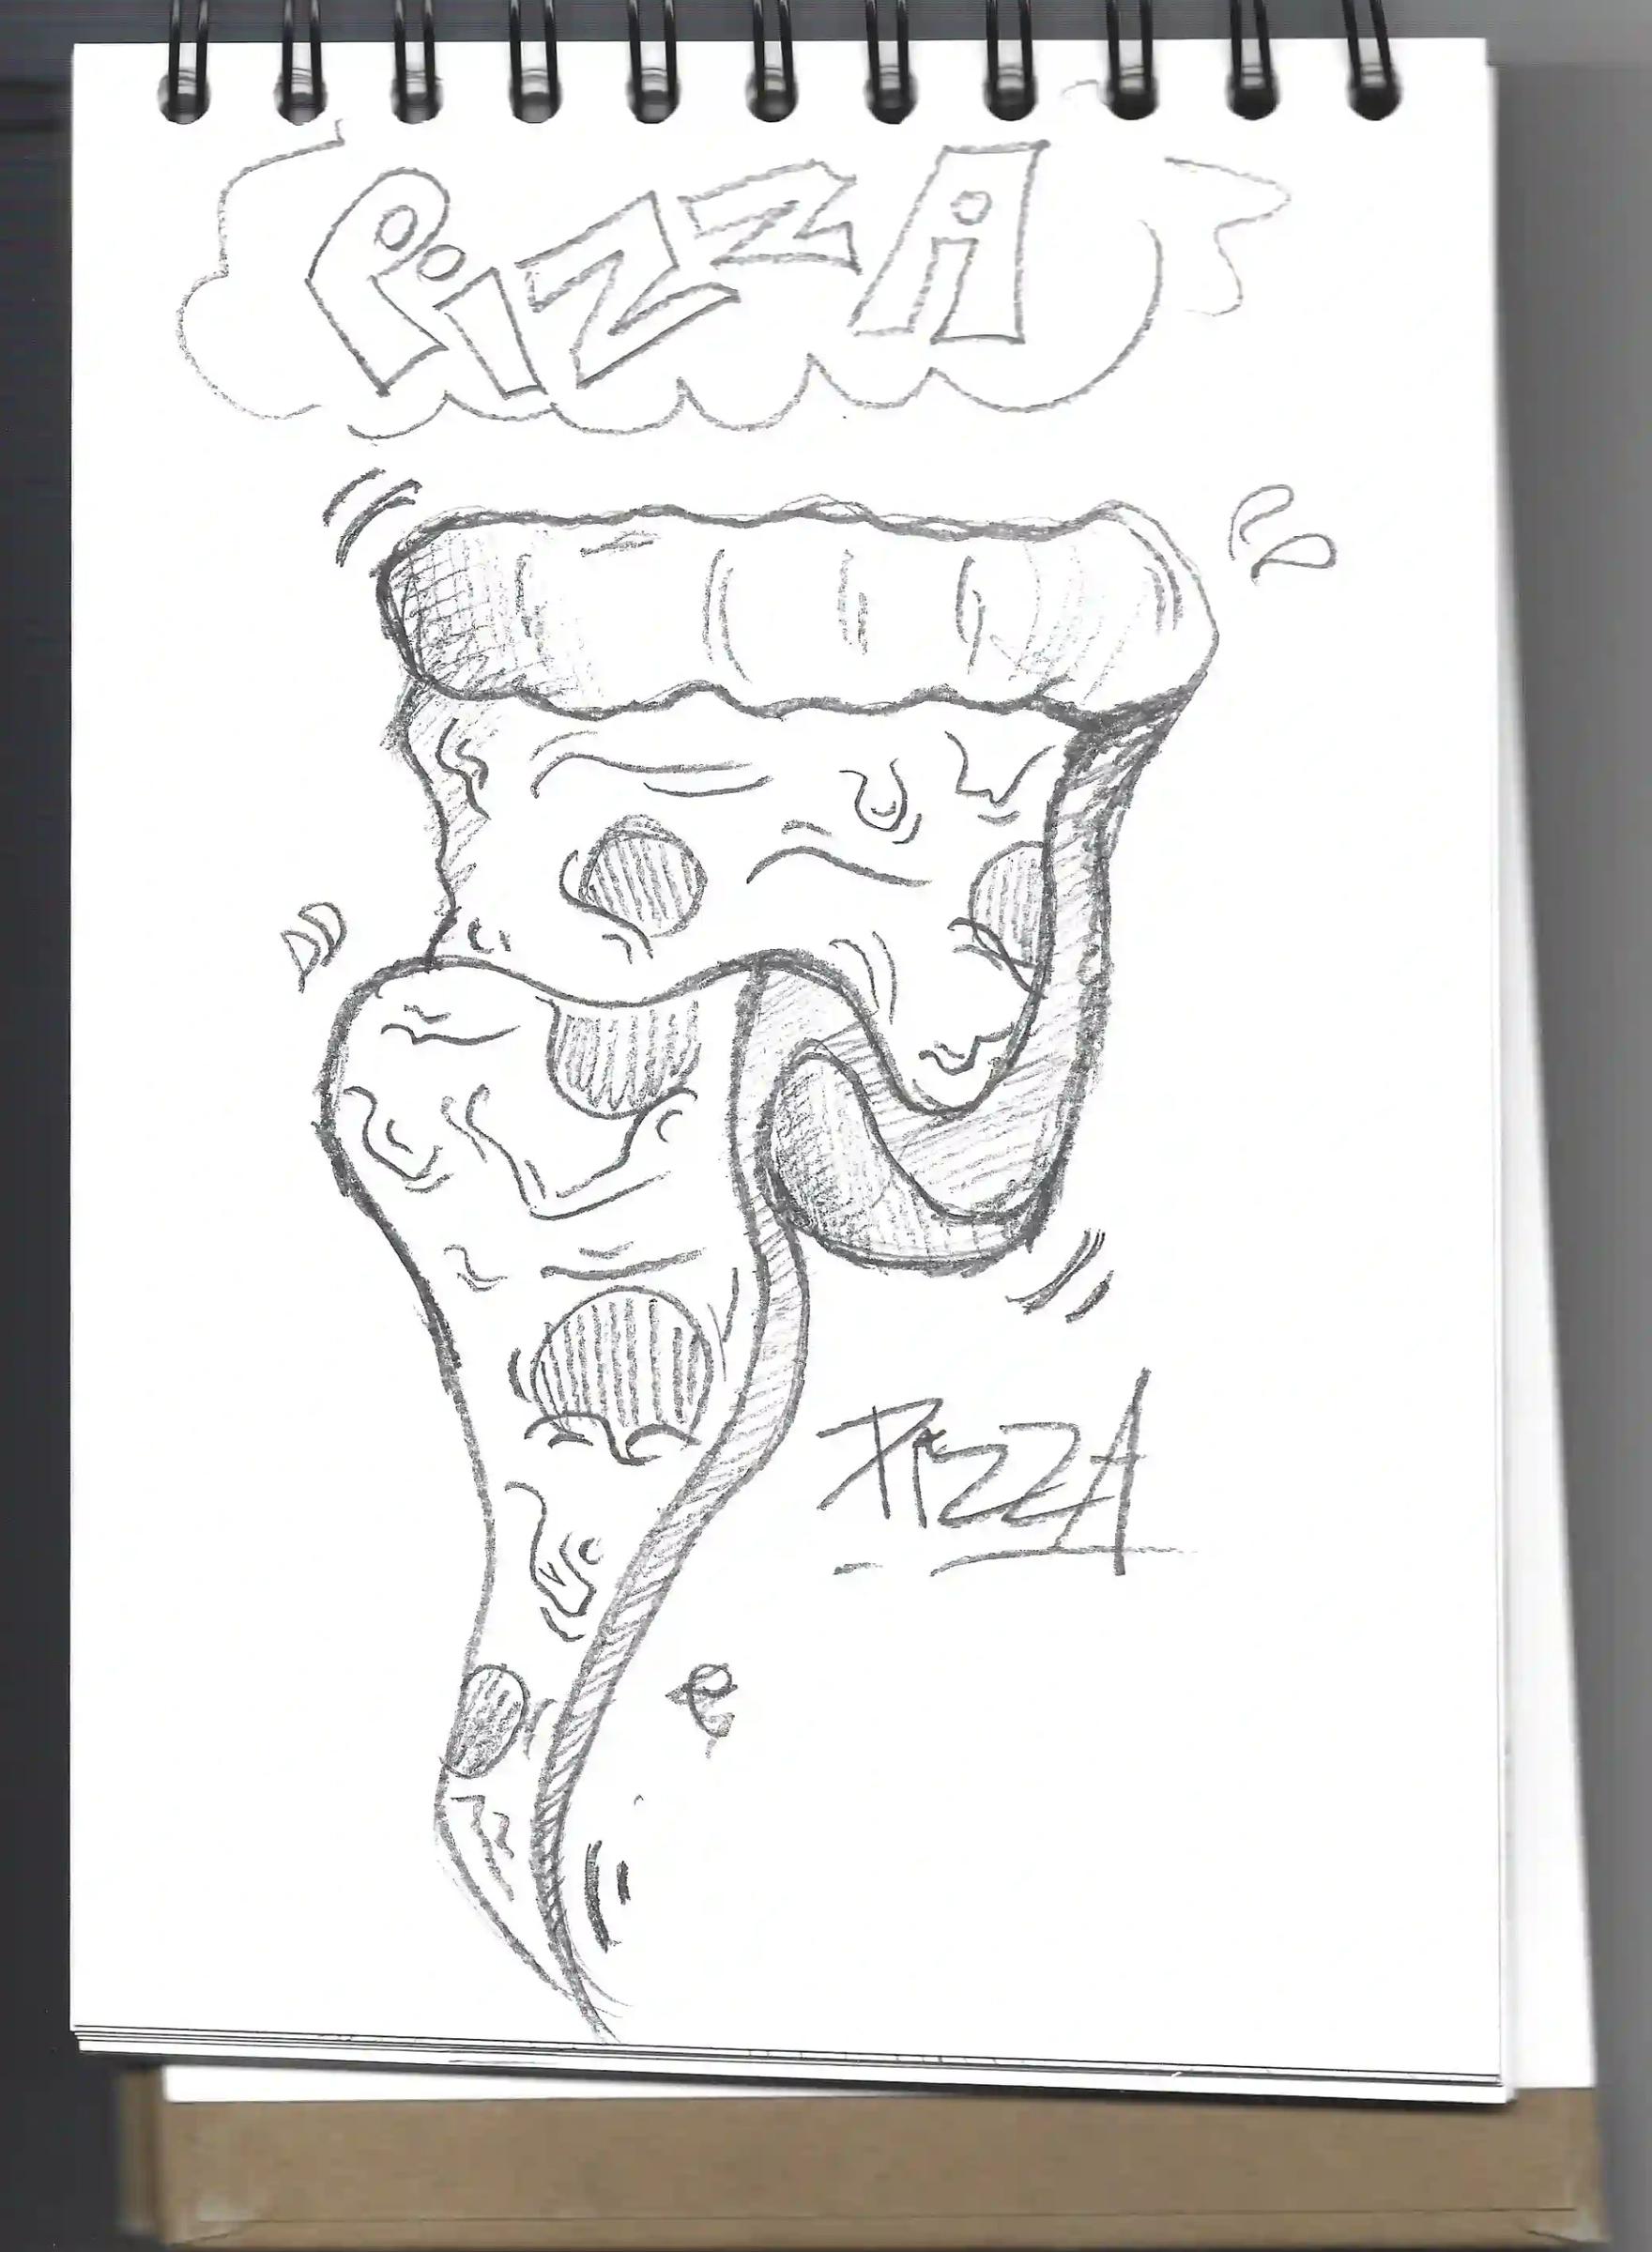 Pizza brand illustration